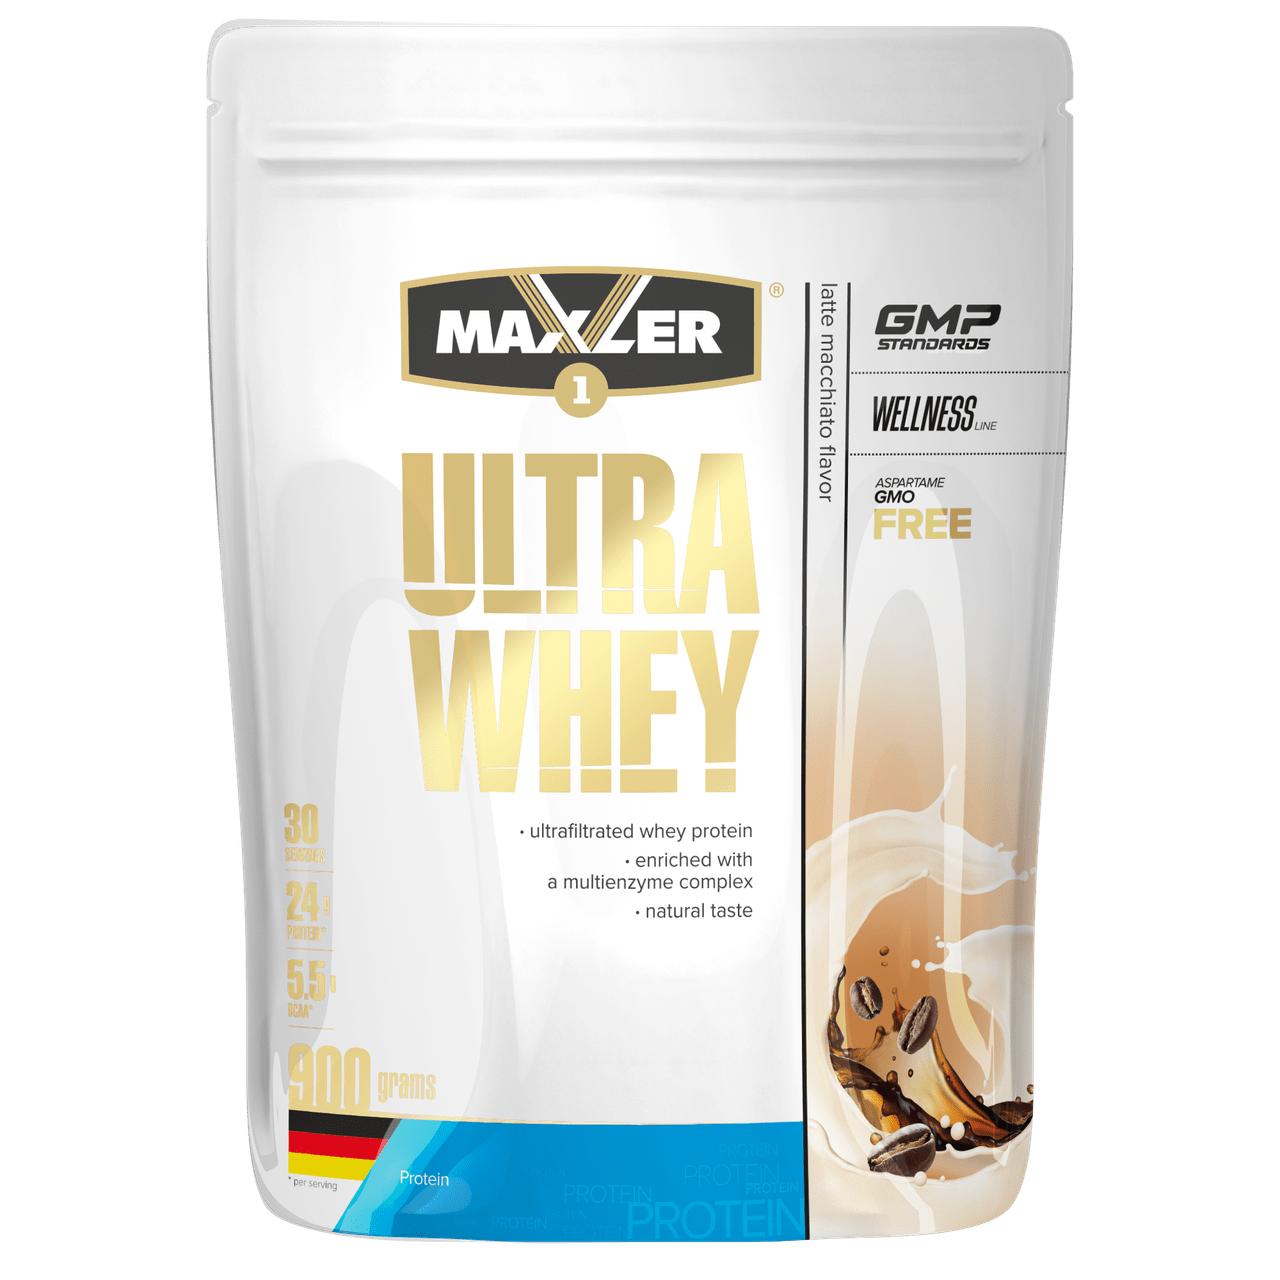 Комплексный протеин Maxler Ultra Whey (900 г) пакет макслер latte macchiato,  ml, Maxler. Protein Blend. 